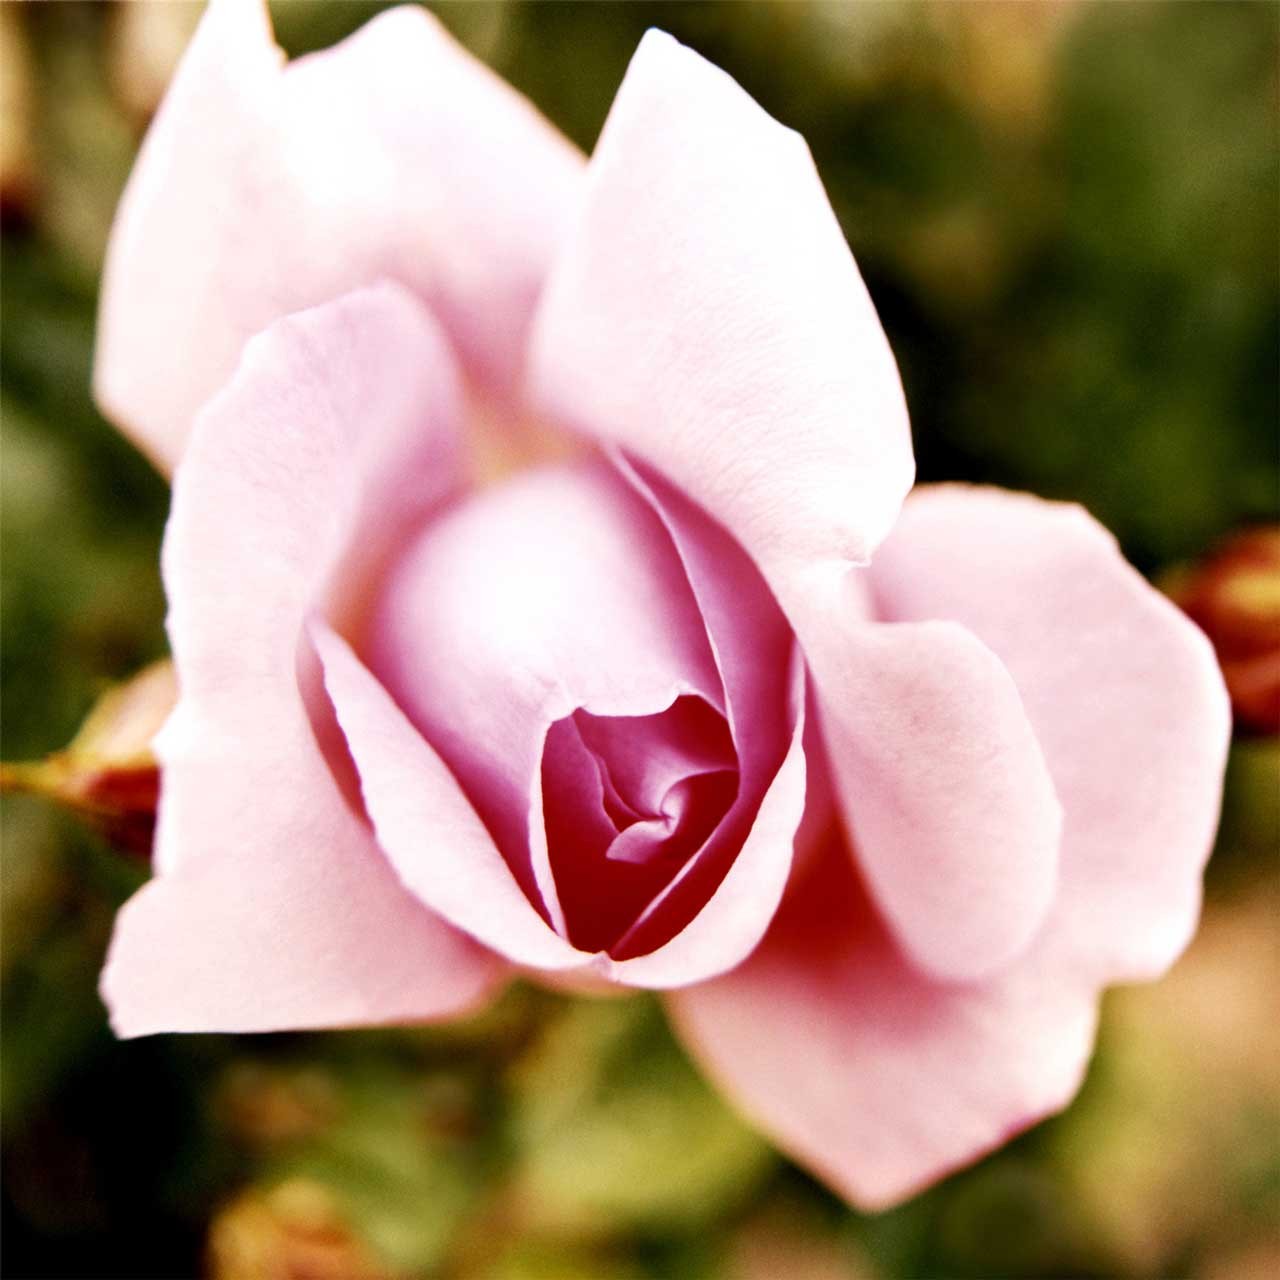 Laure-Maud_05_photographe_jardin-fleur-rose_2